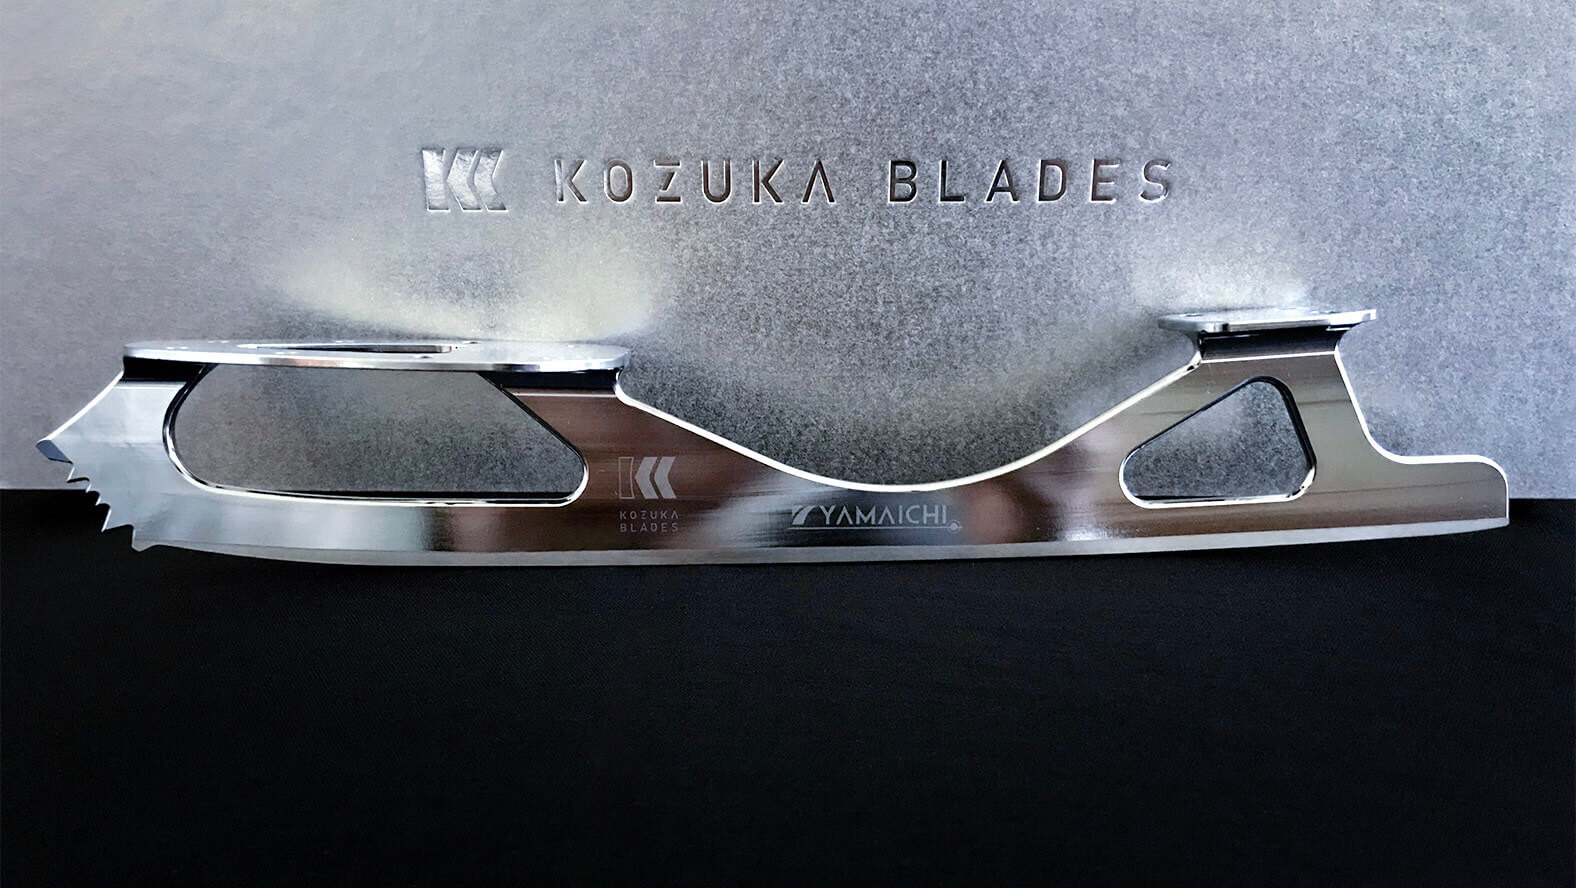 Figure skating blades 'Kozuka Blades' developed by Yamaichi Special Steel and Olympic figure skater Takahiko Kozuka